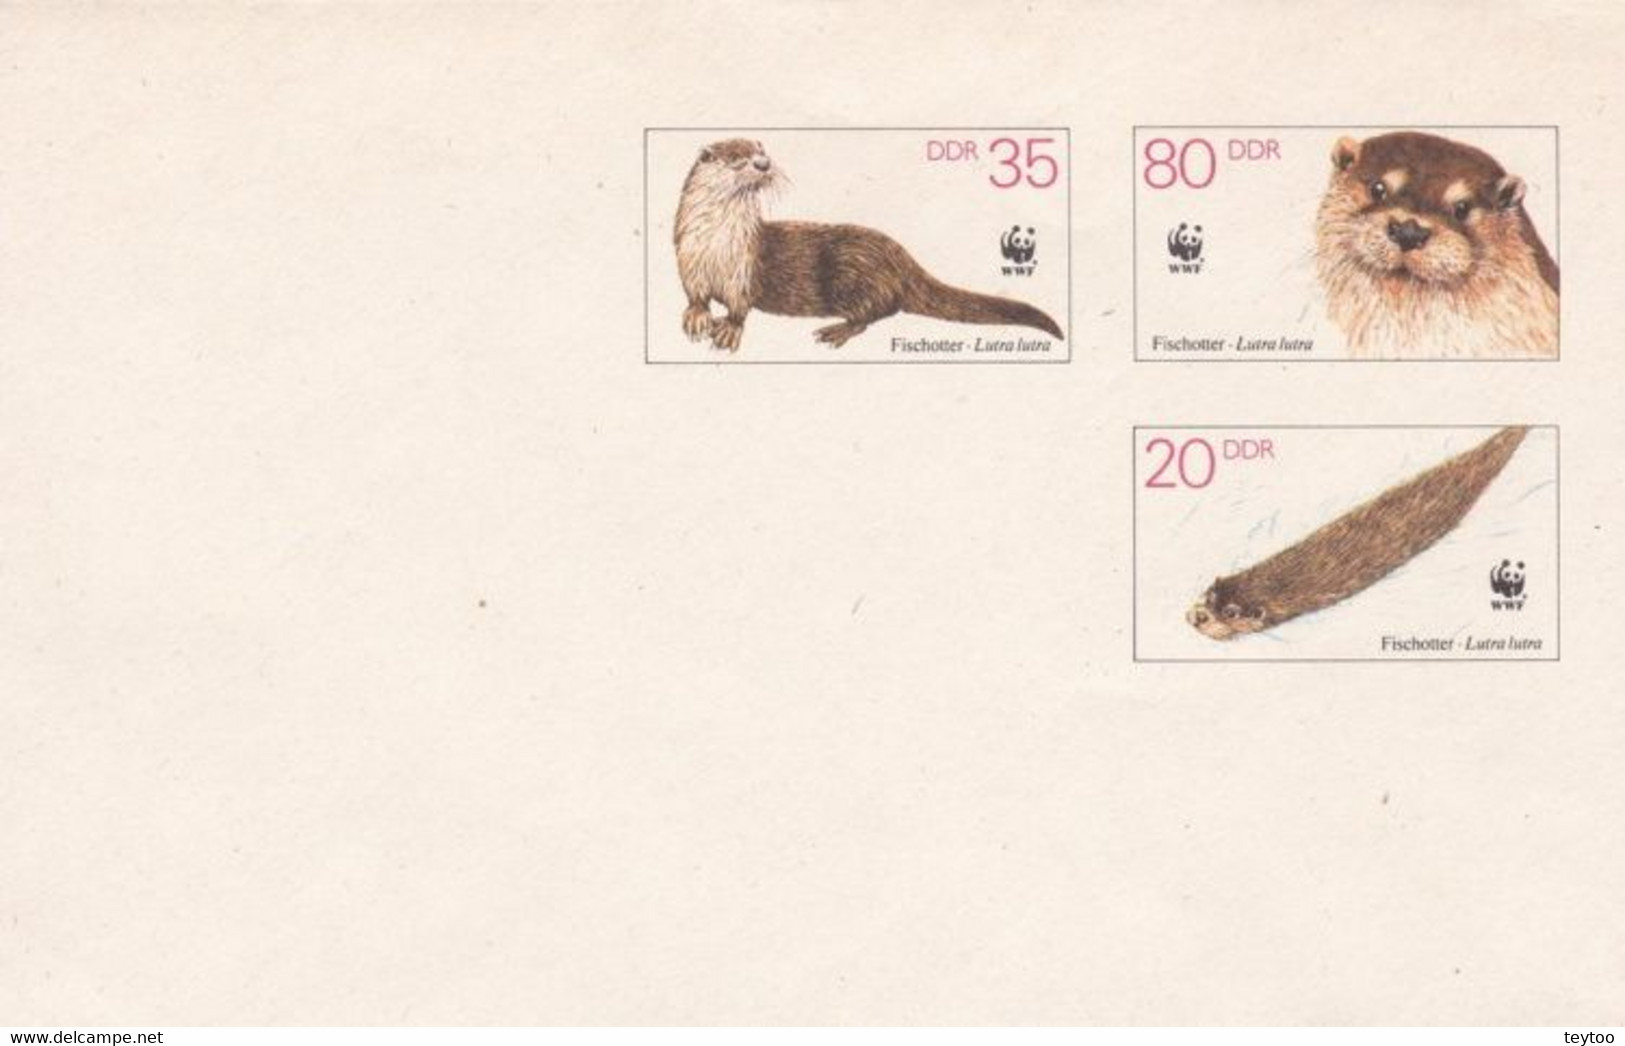 C0013.2# DDR 1987 [ENP] Entero Postal Nutria - WWF (M) - Covers - Mint